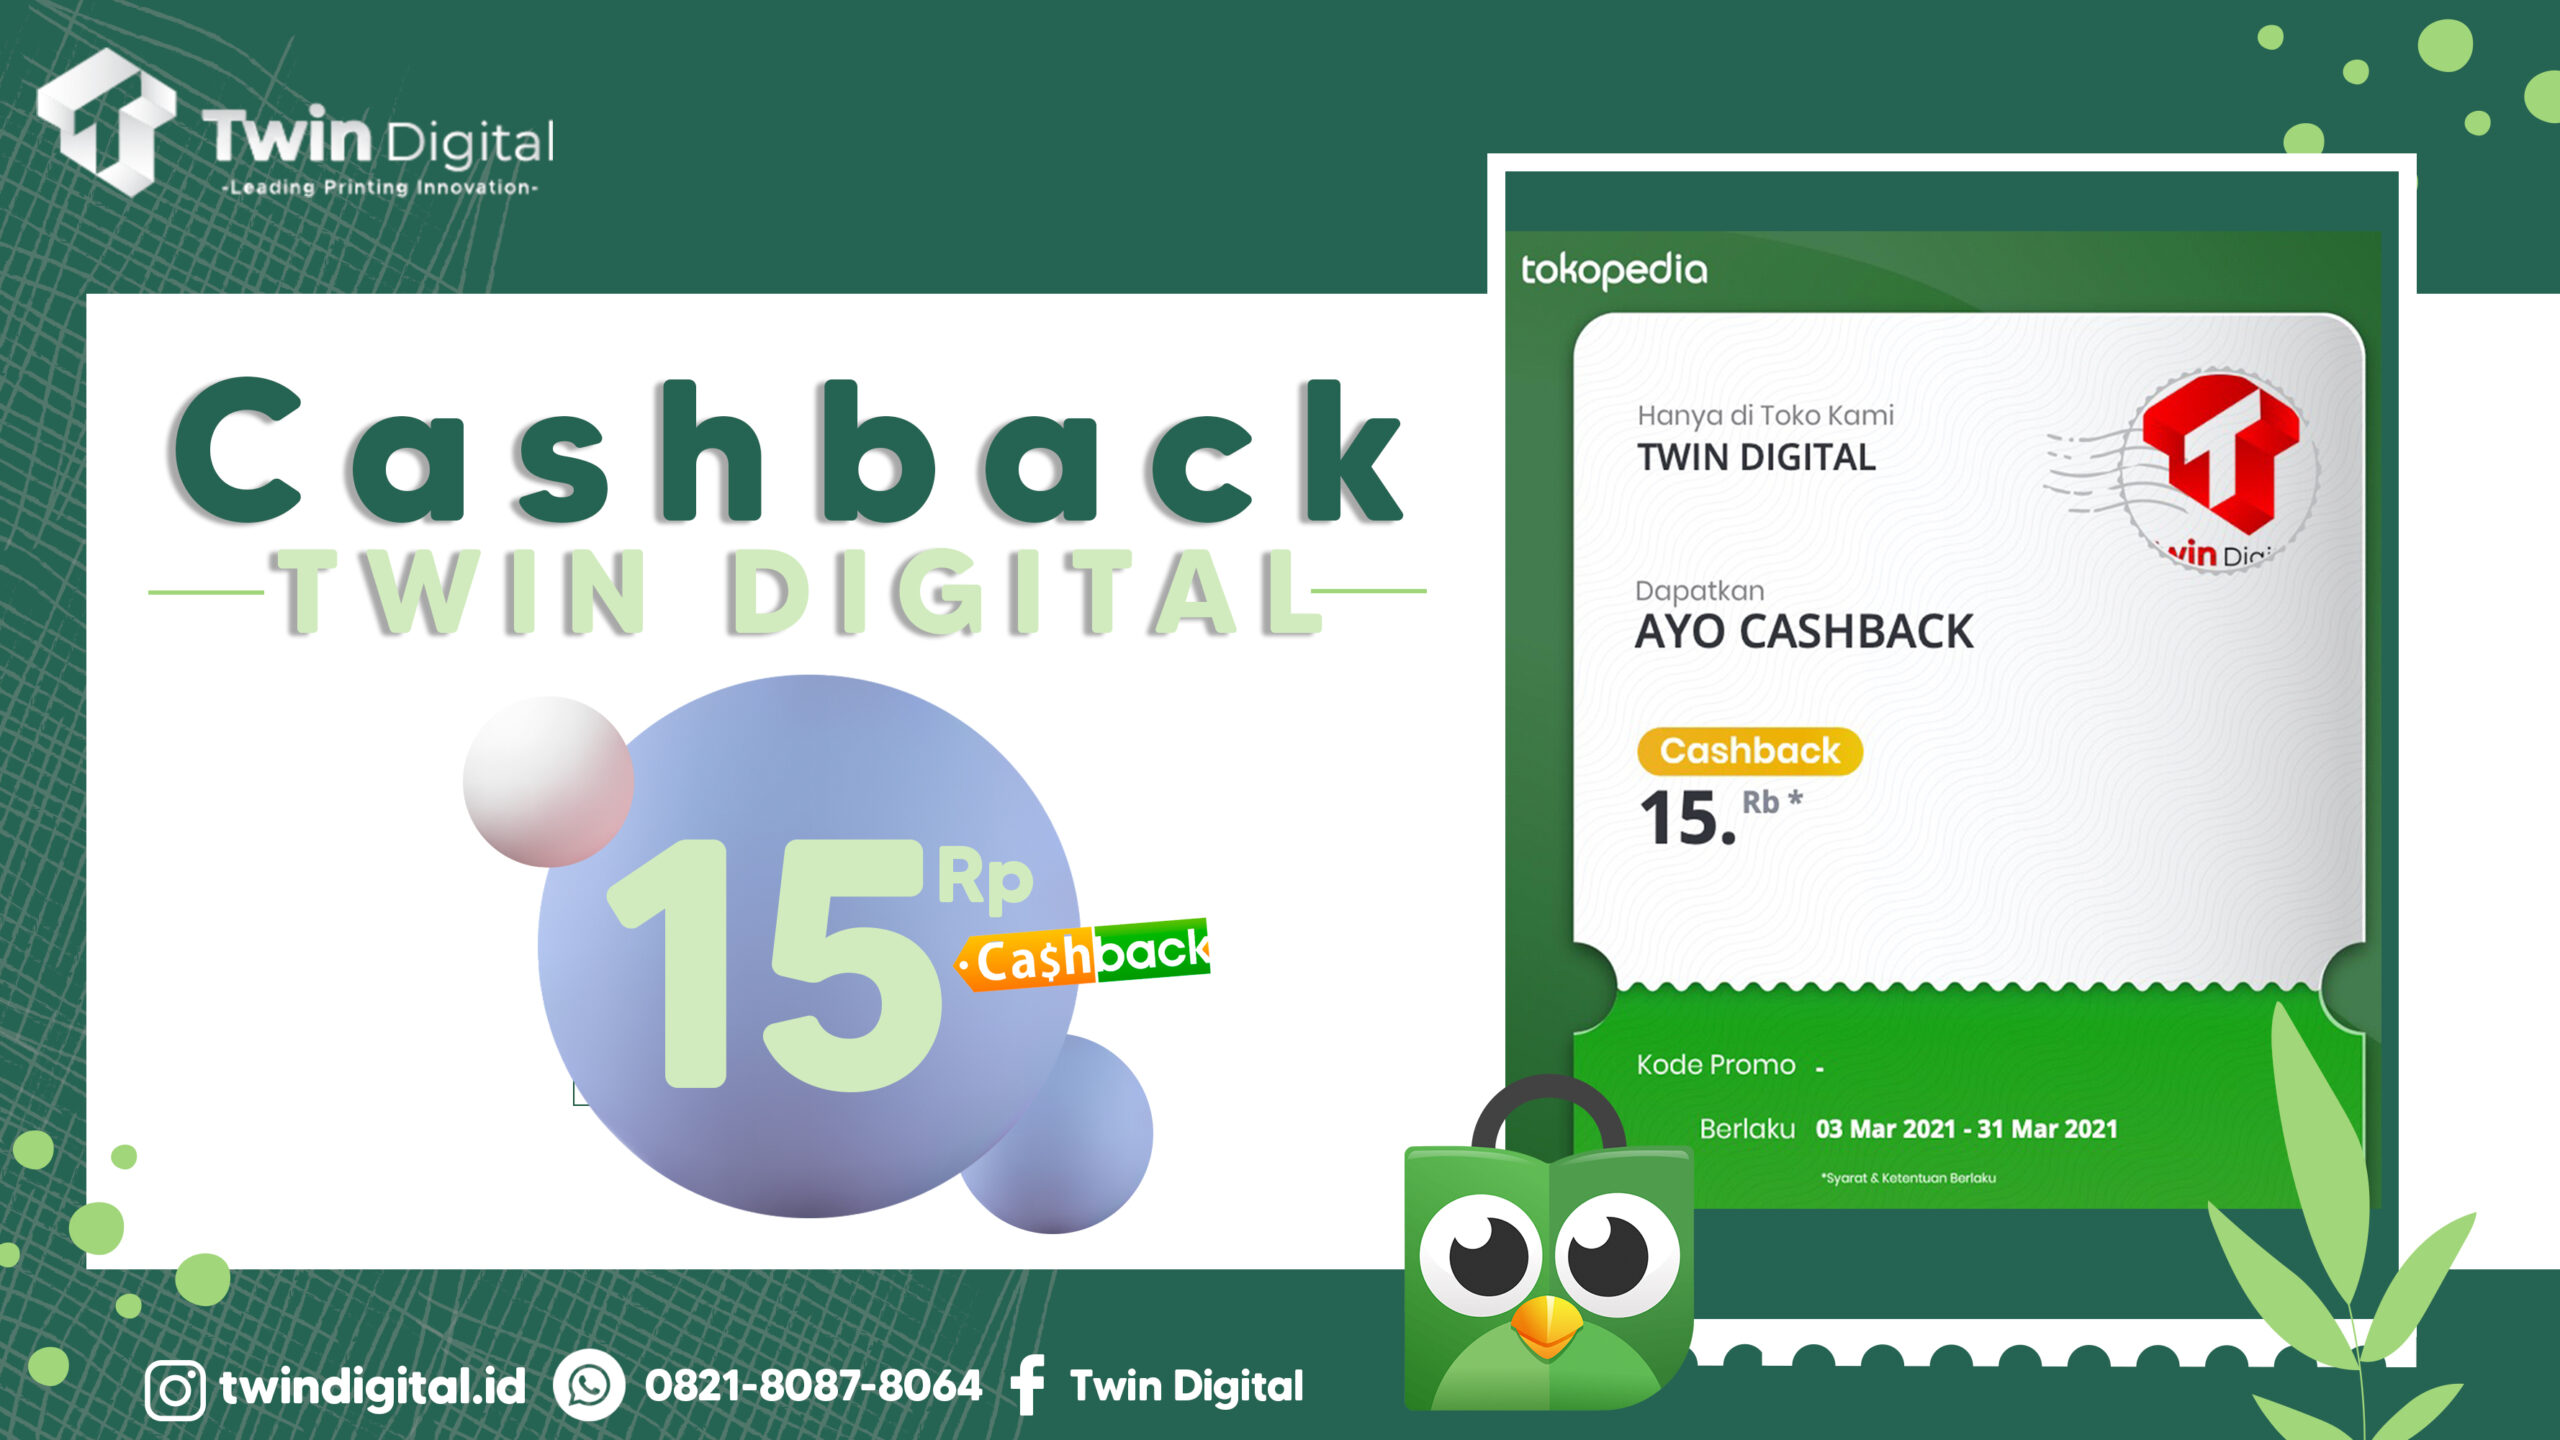 Cashback Tokopedia Twin Digital - Twin Digital